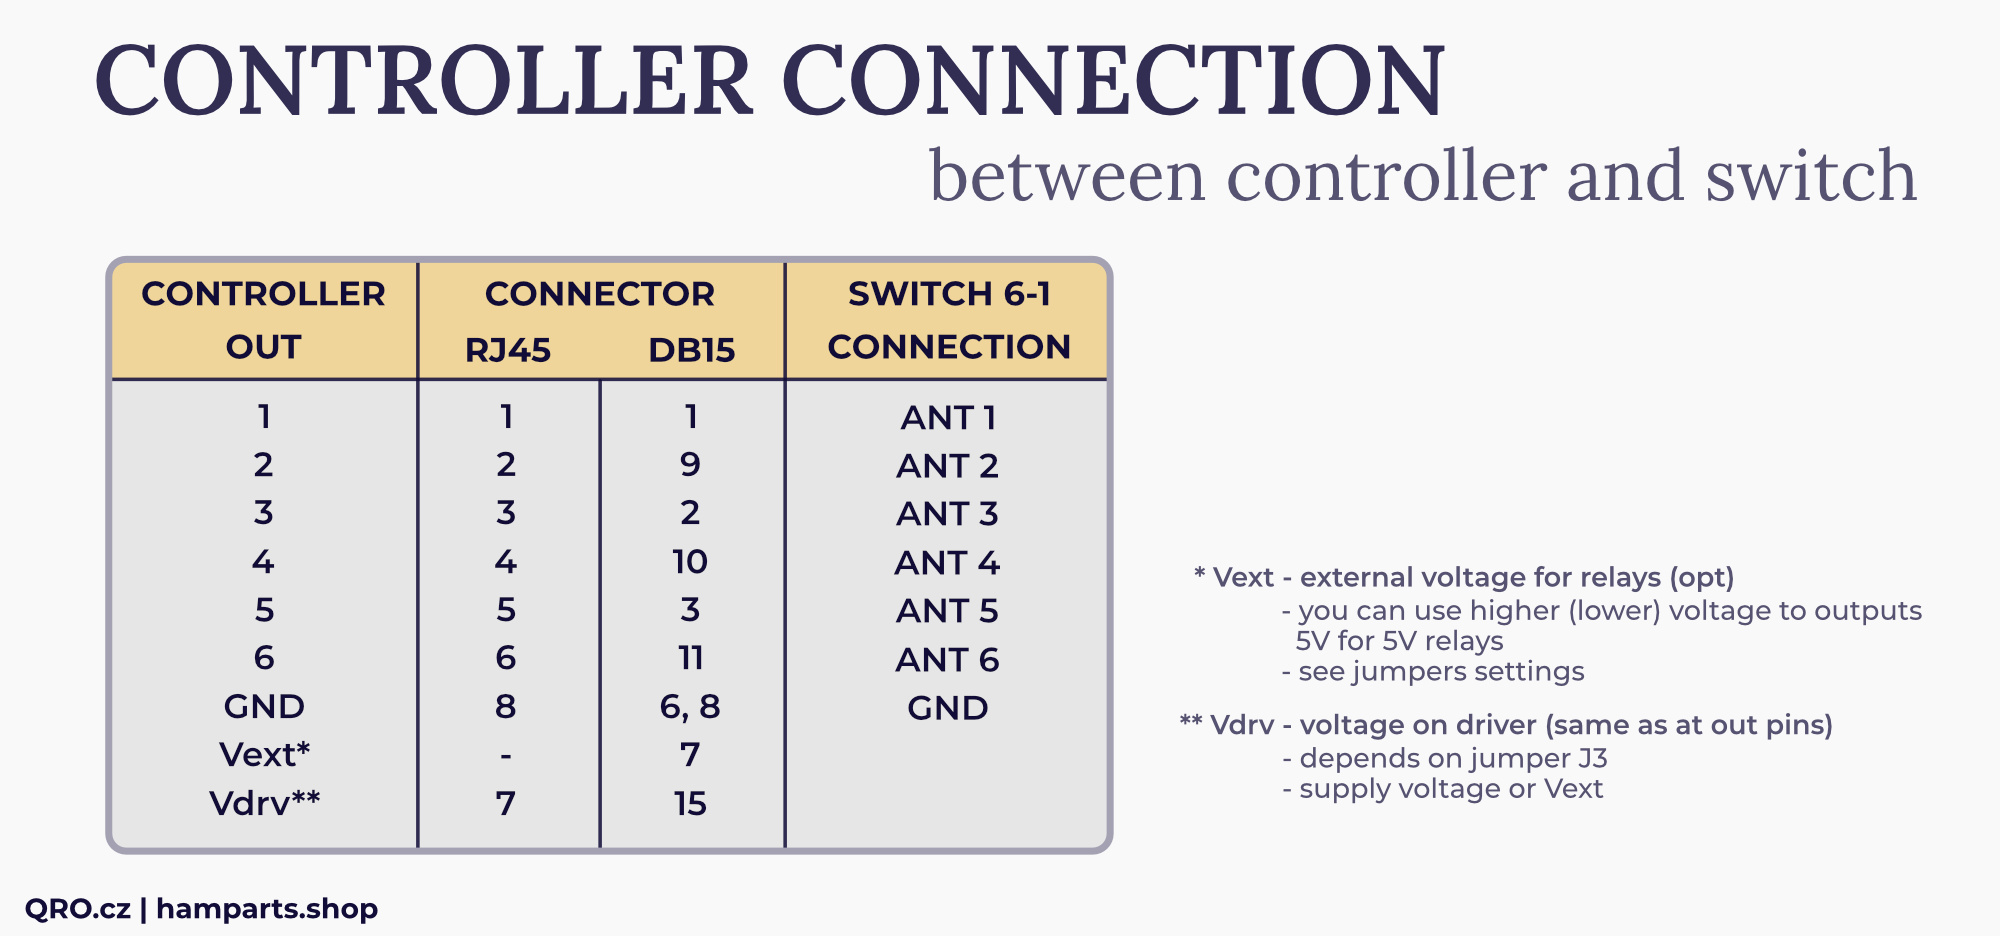 6-1 easy controller connection qro.cz hamparts.shop